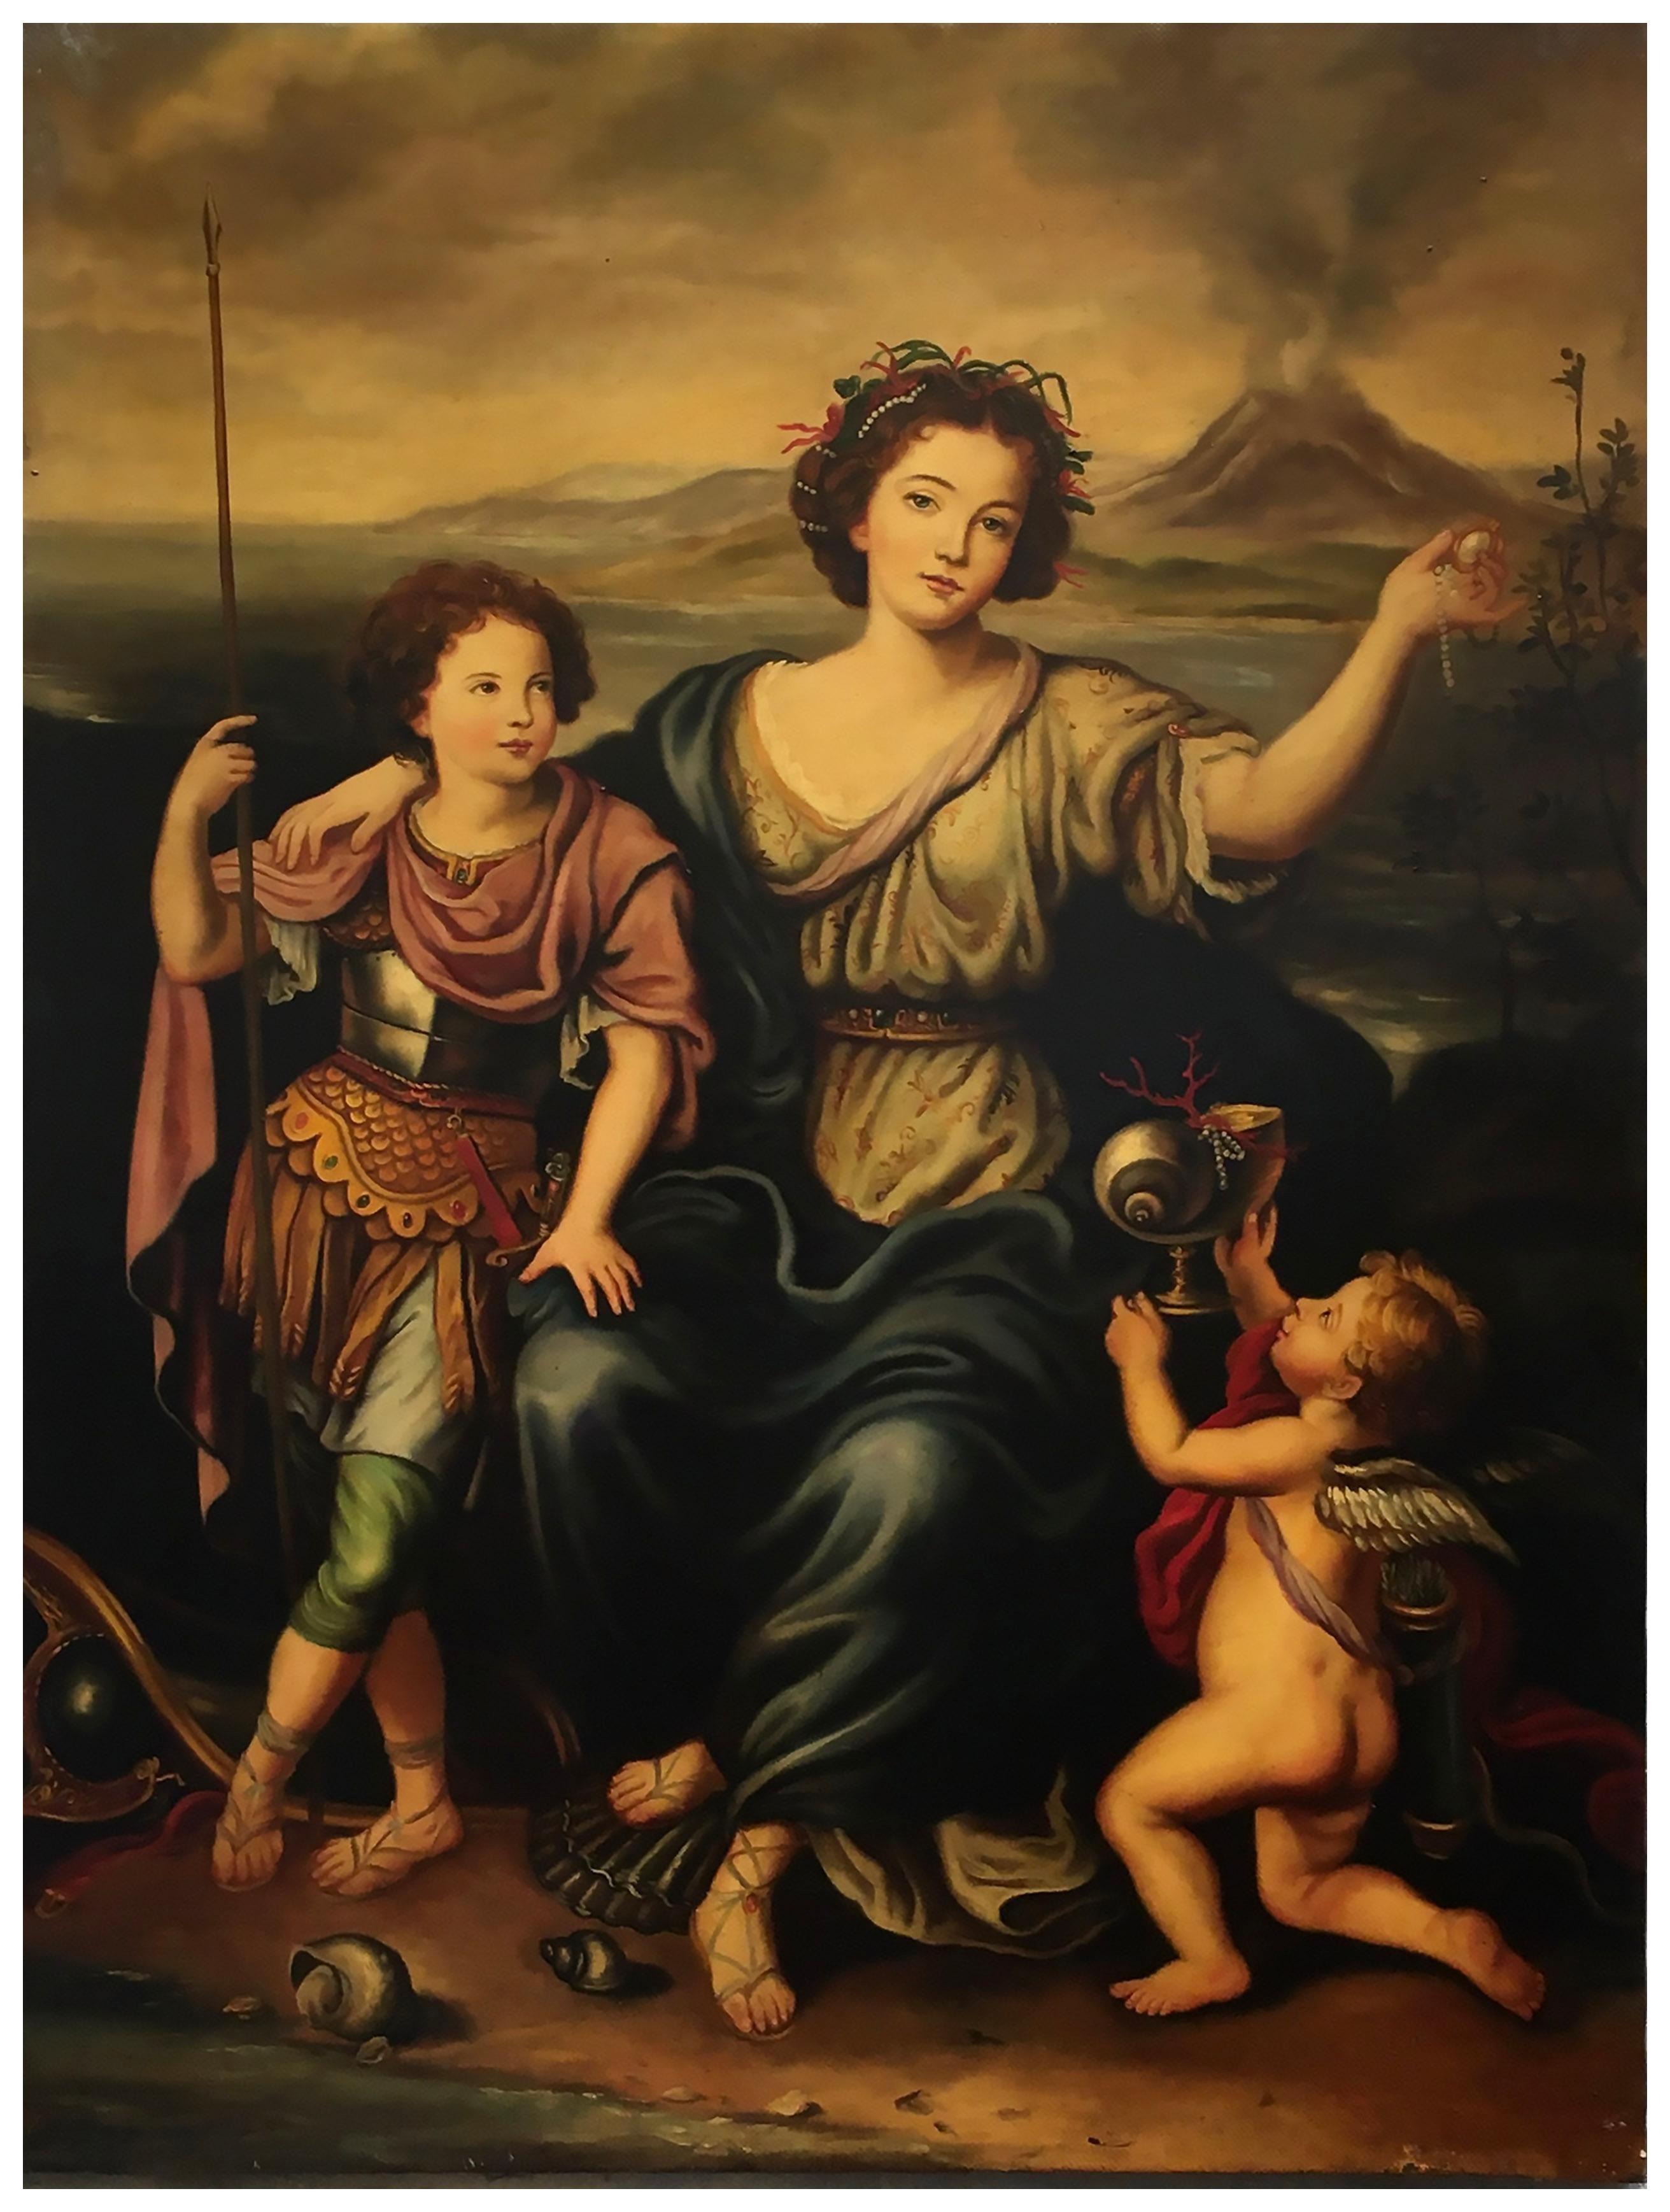 Allegorical Scene - Oil on canvas cm.120x90, Eugenio De Blasi, Italy, 2005.
This is his reinterpretation of a greatest old master painting 